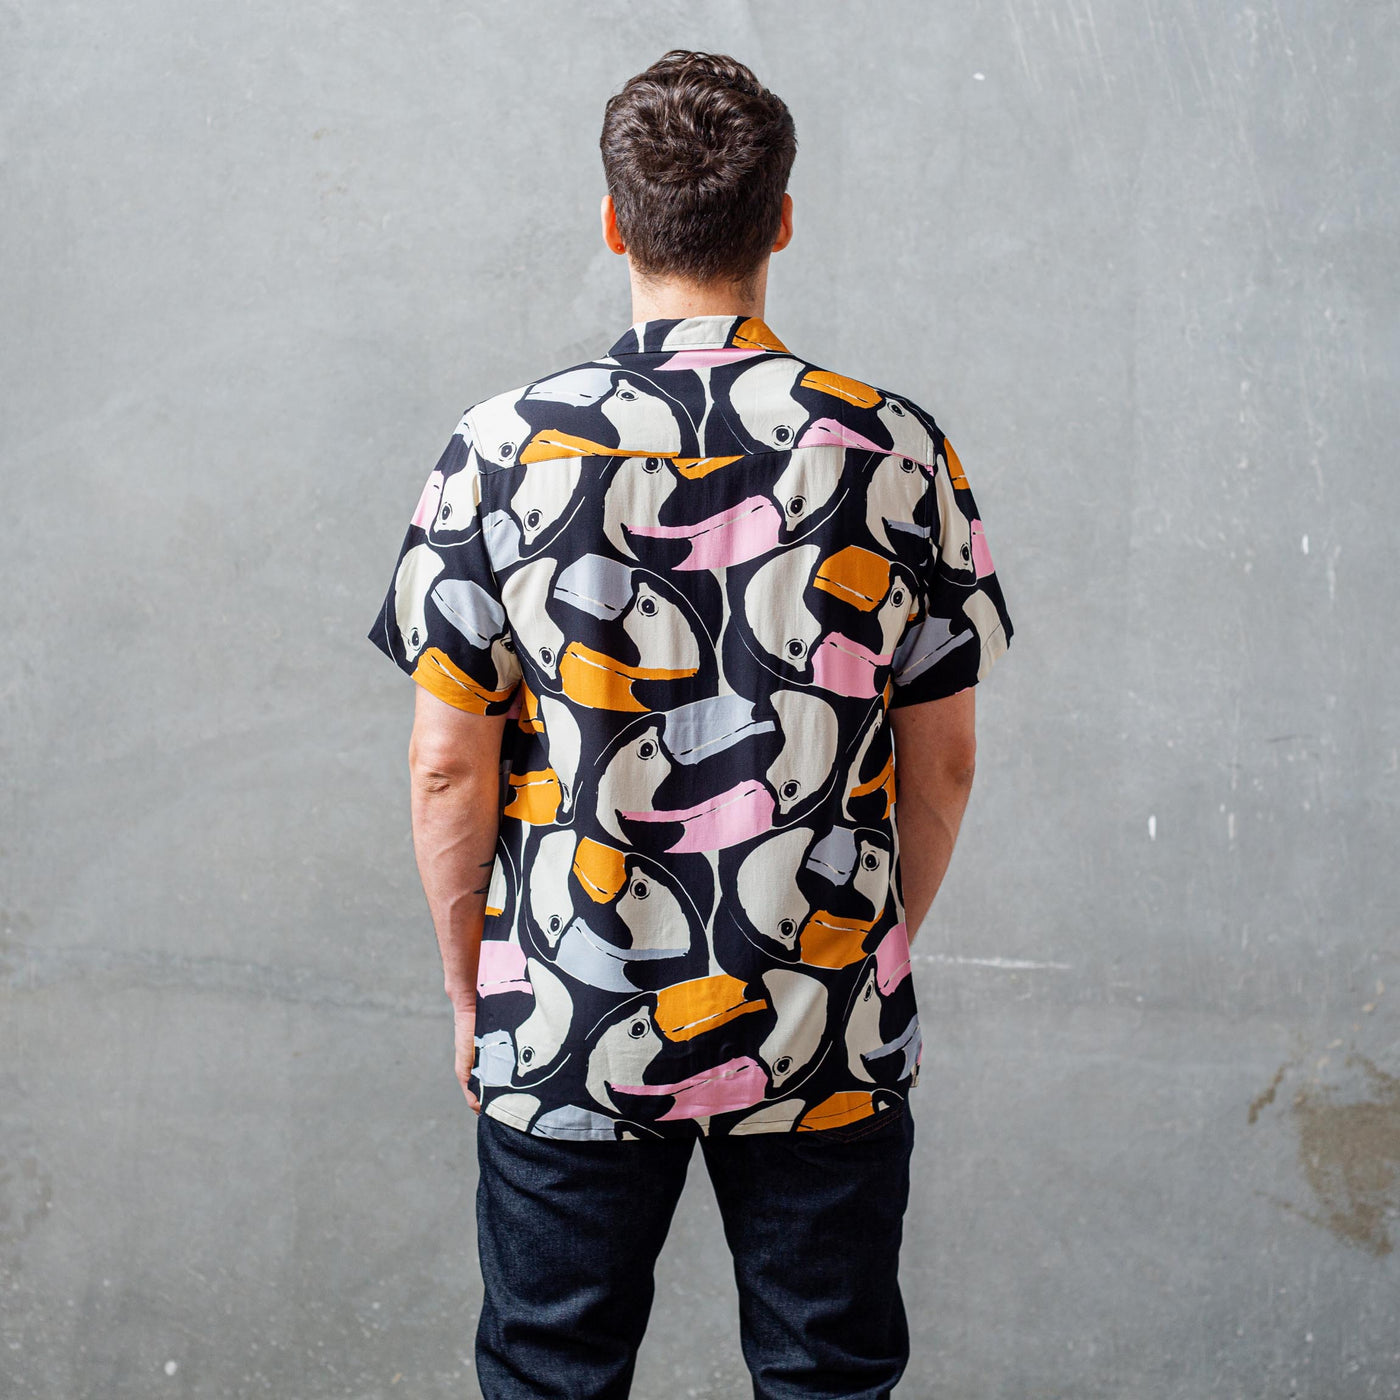 Duvin Design - Hawaiian Shirt - Toucan